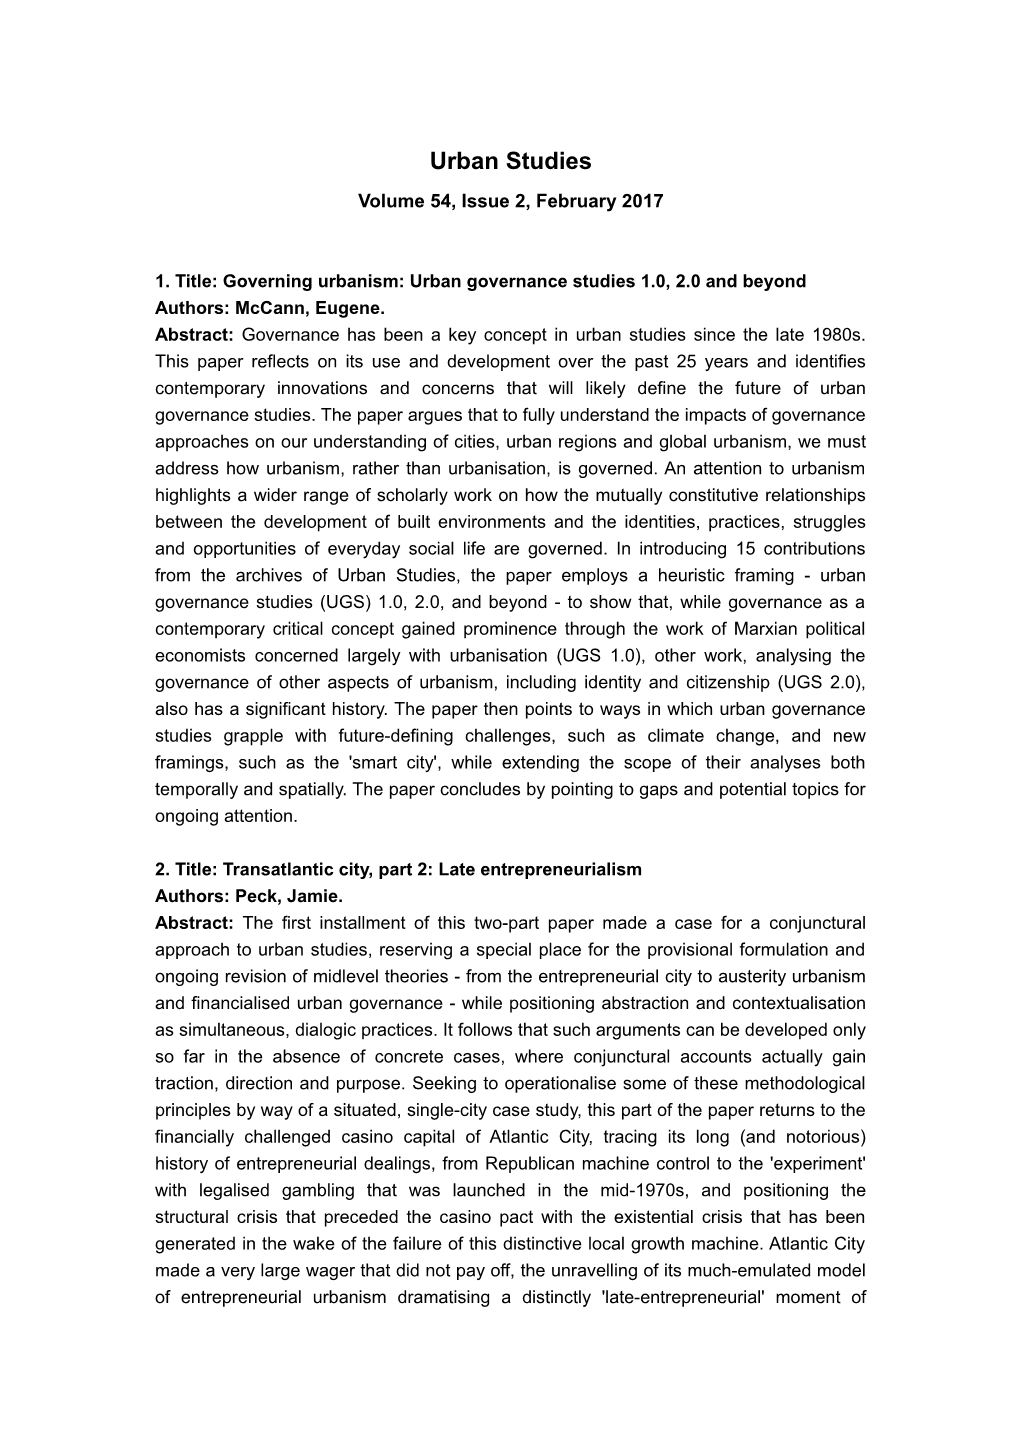 1. Title: Governing Urbanism: Urban Governance Studies 1.0, 2.0 and Beyond